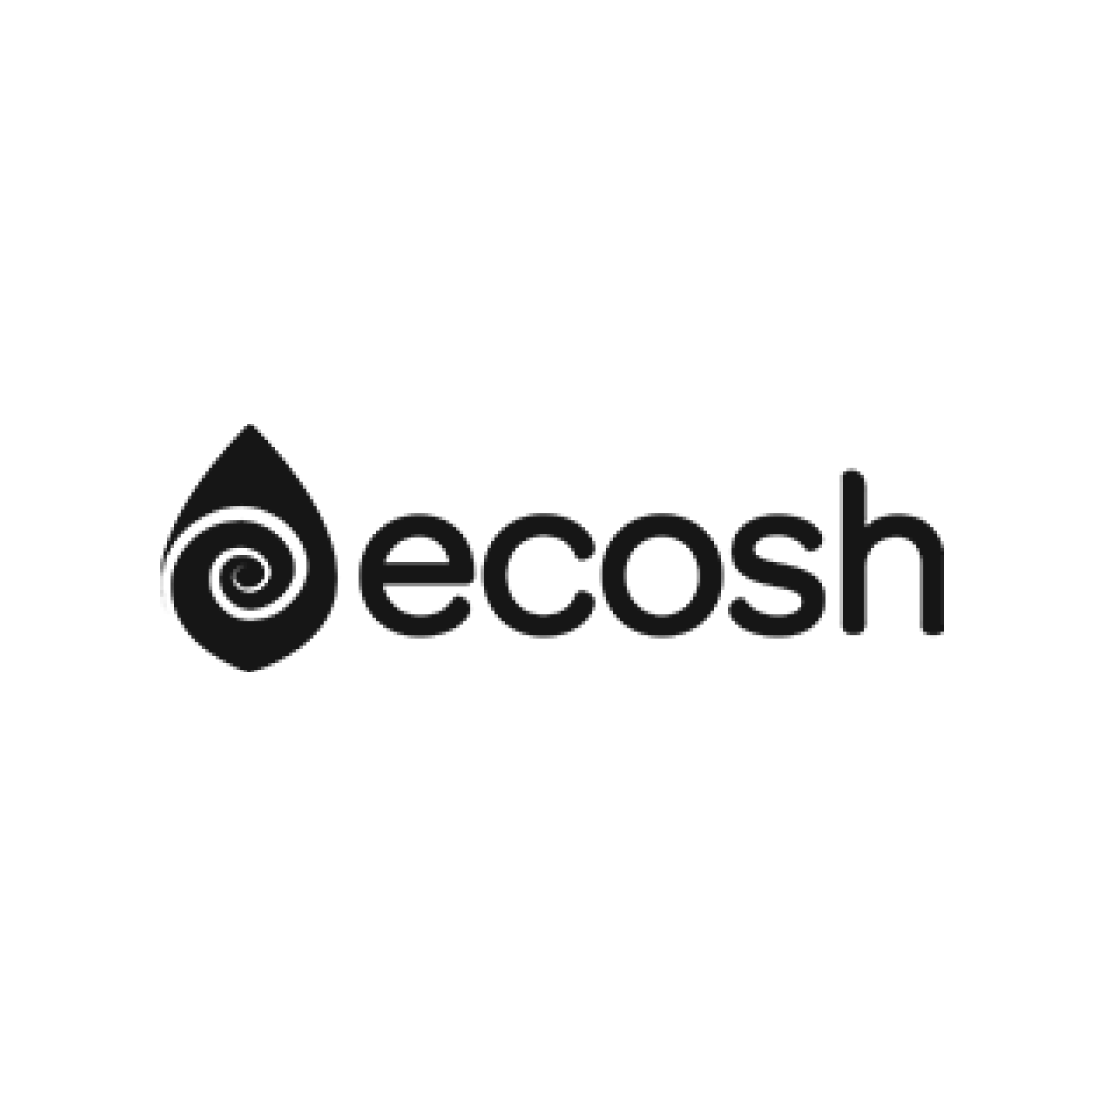 Ecosh